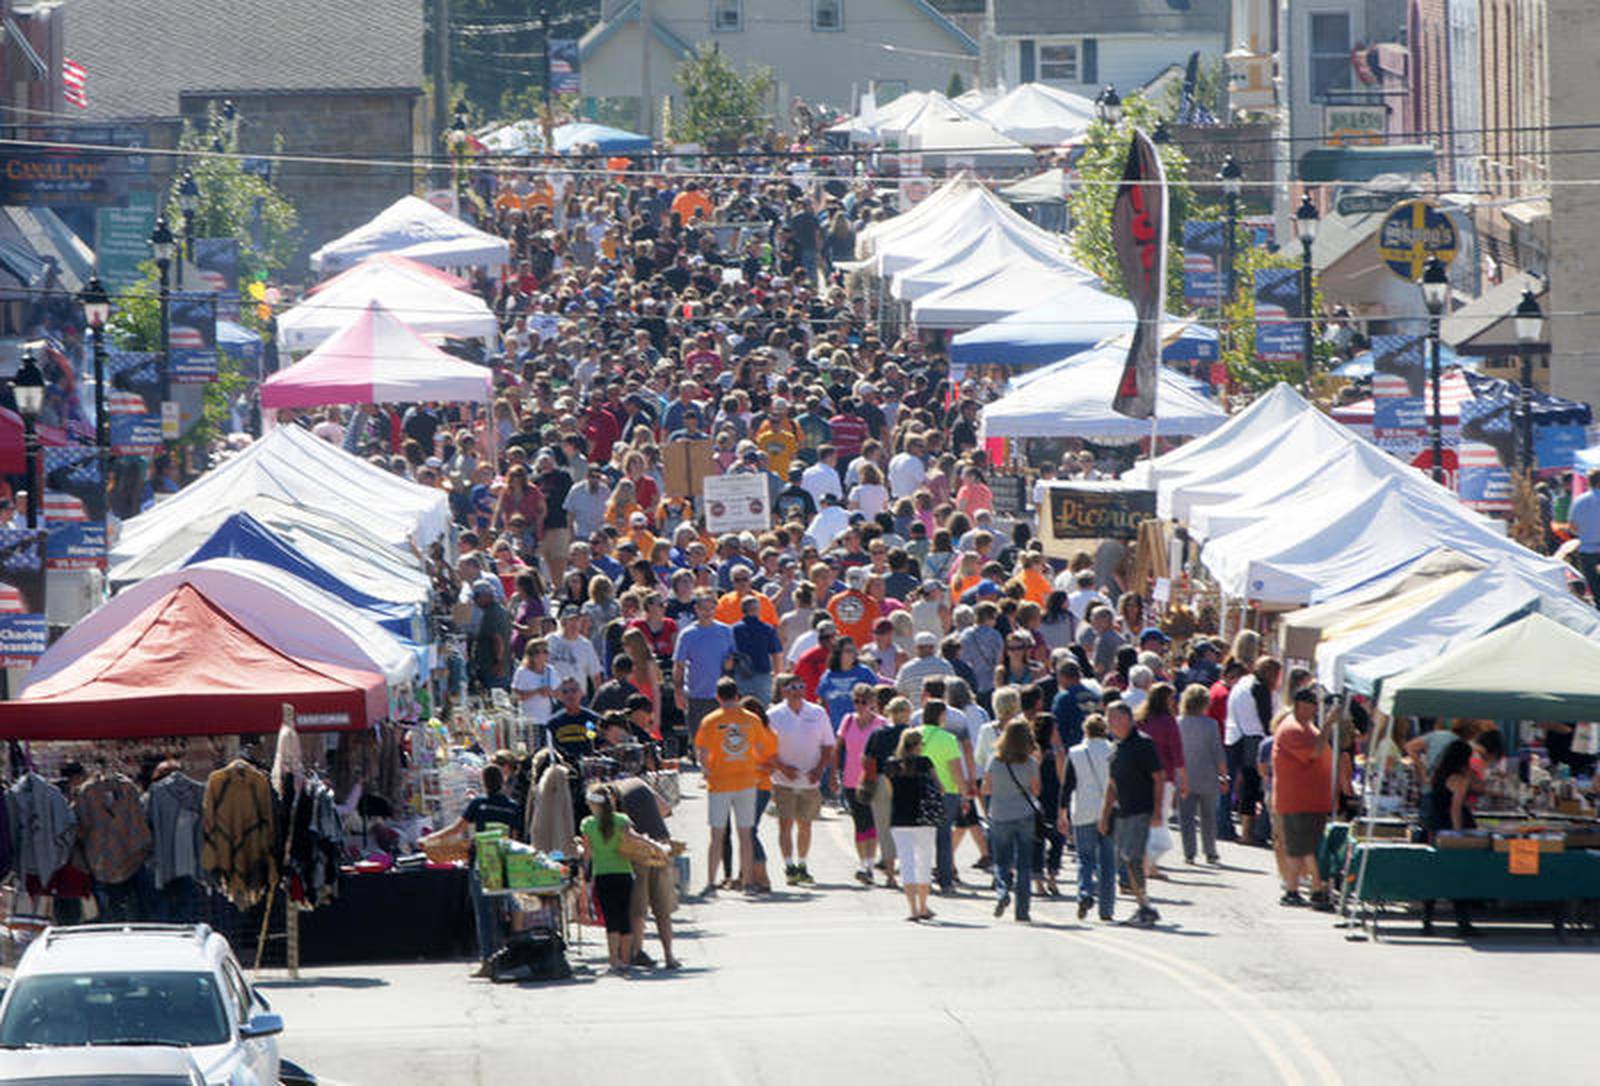 No Burgoo Annual fall festival in Utica generates tens of thousands of